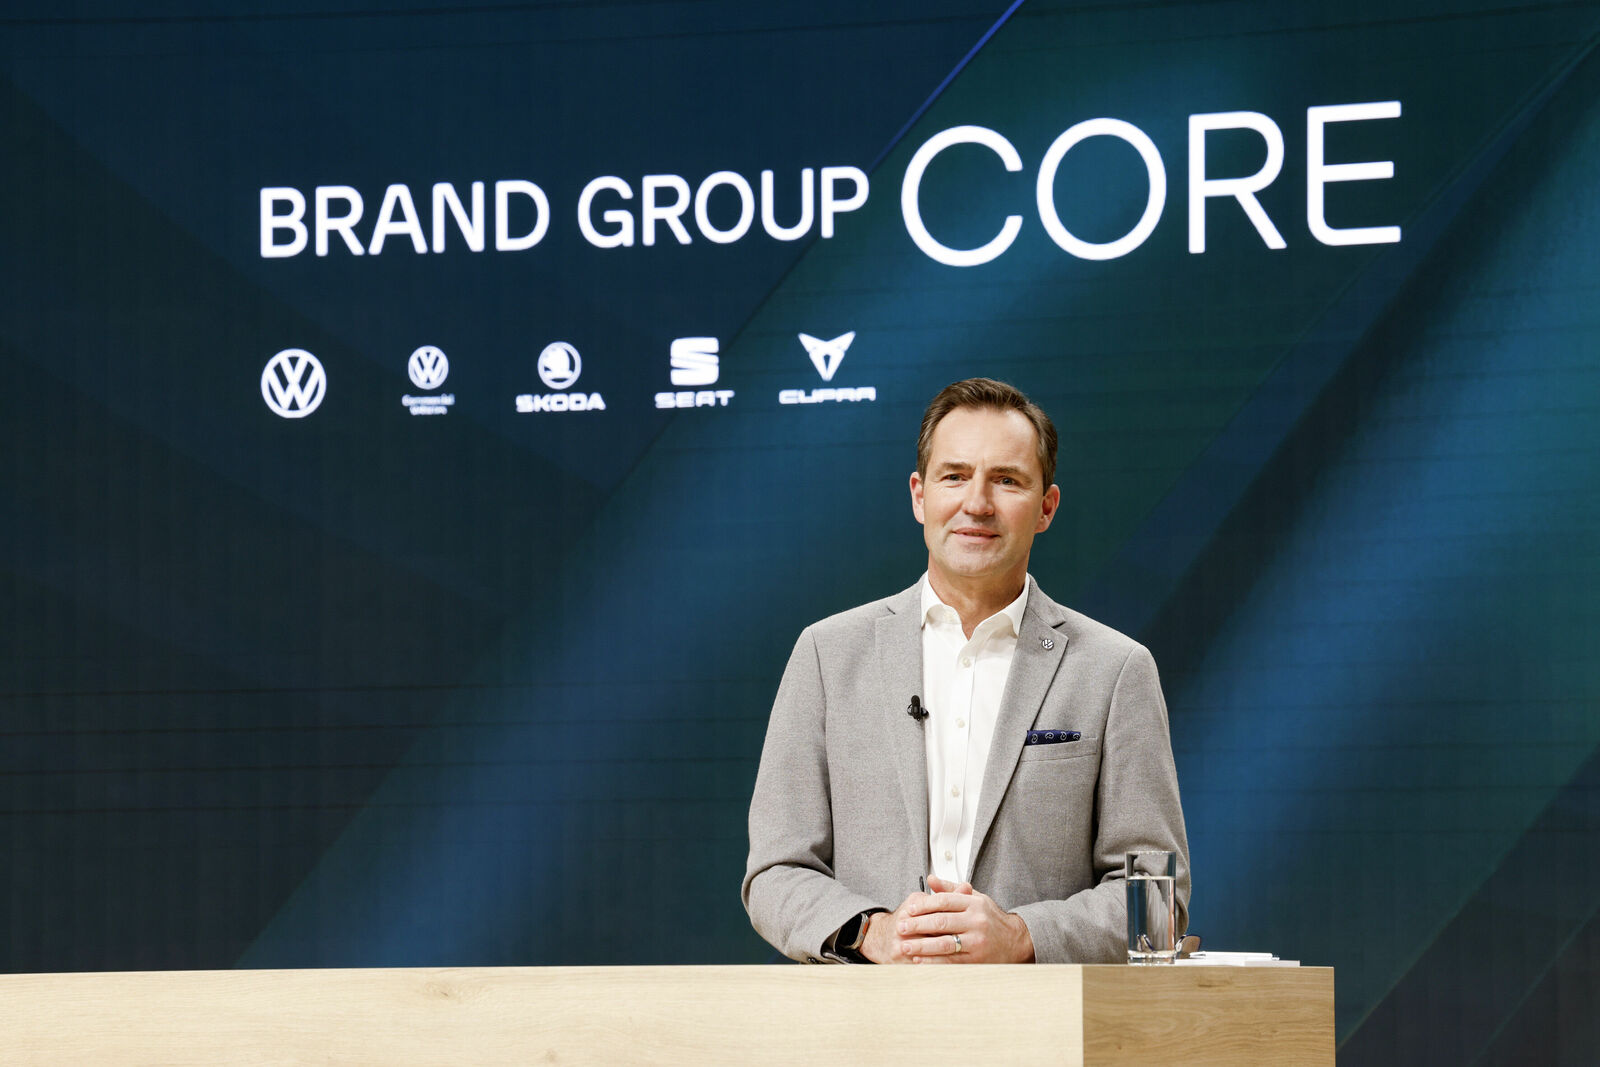 Brand Group Core